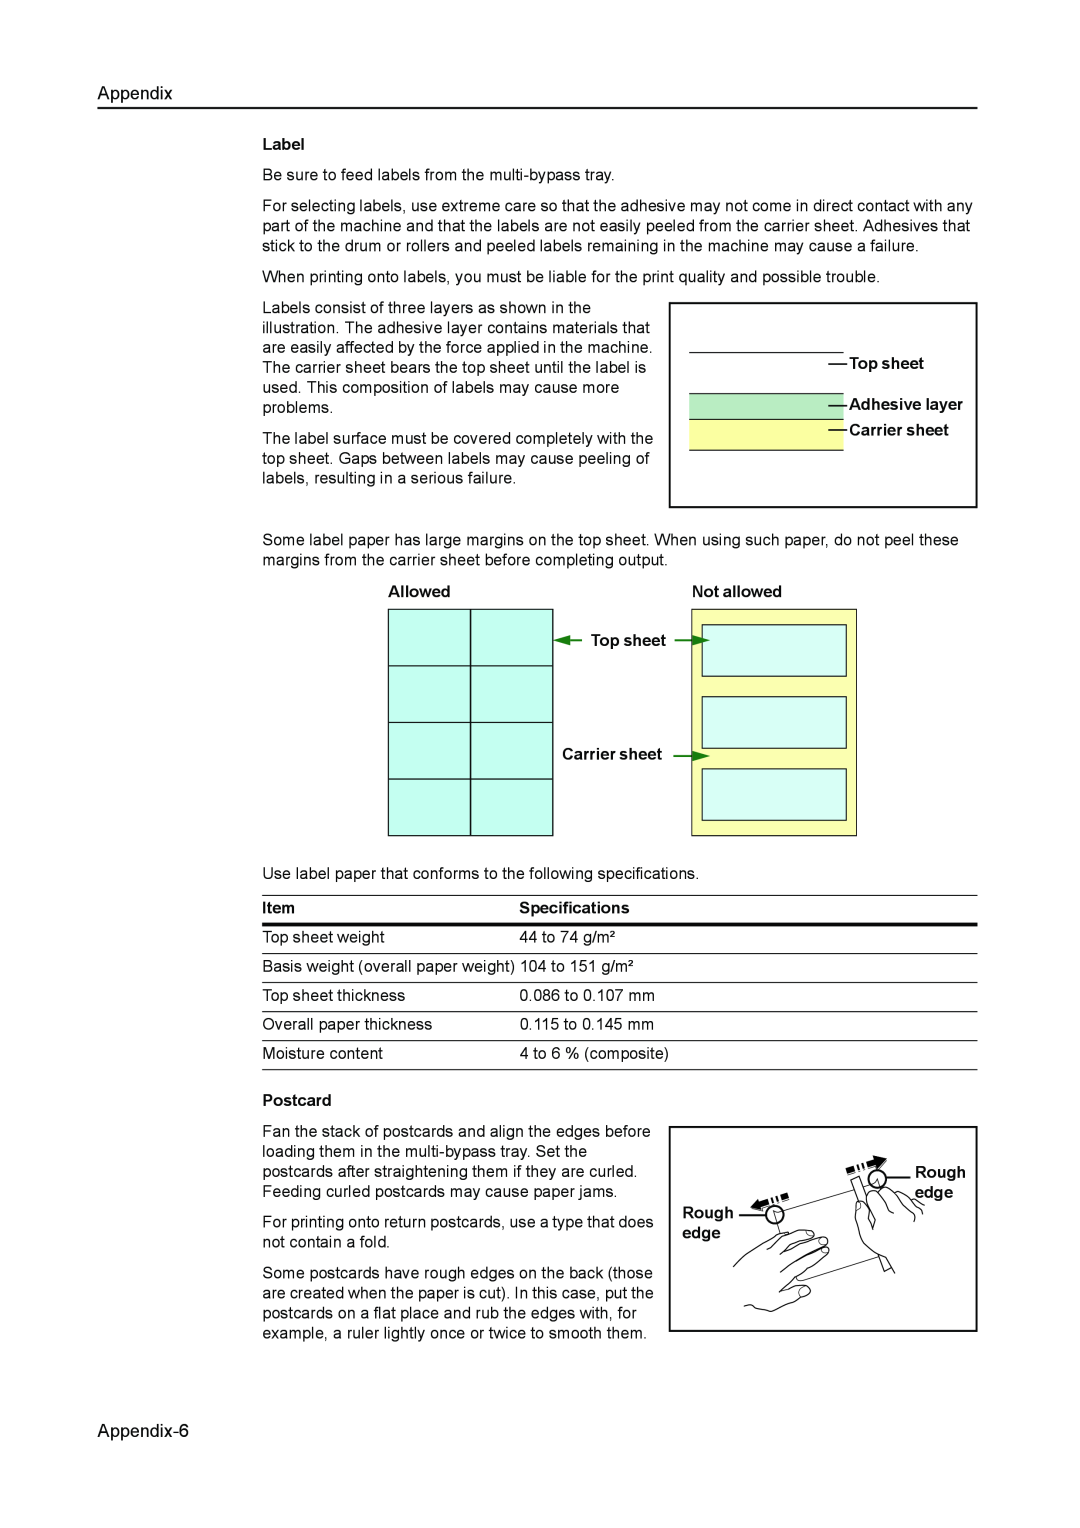 Kyocera 1650, 2050, 2550 manual Appendix-6, Top sheet 